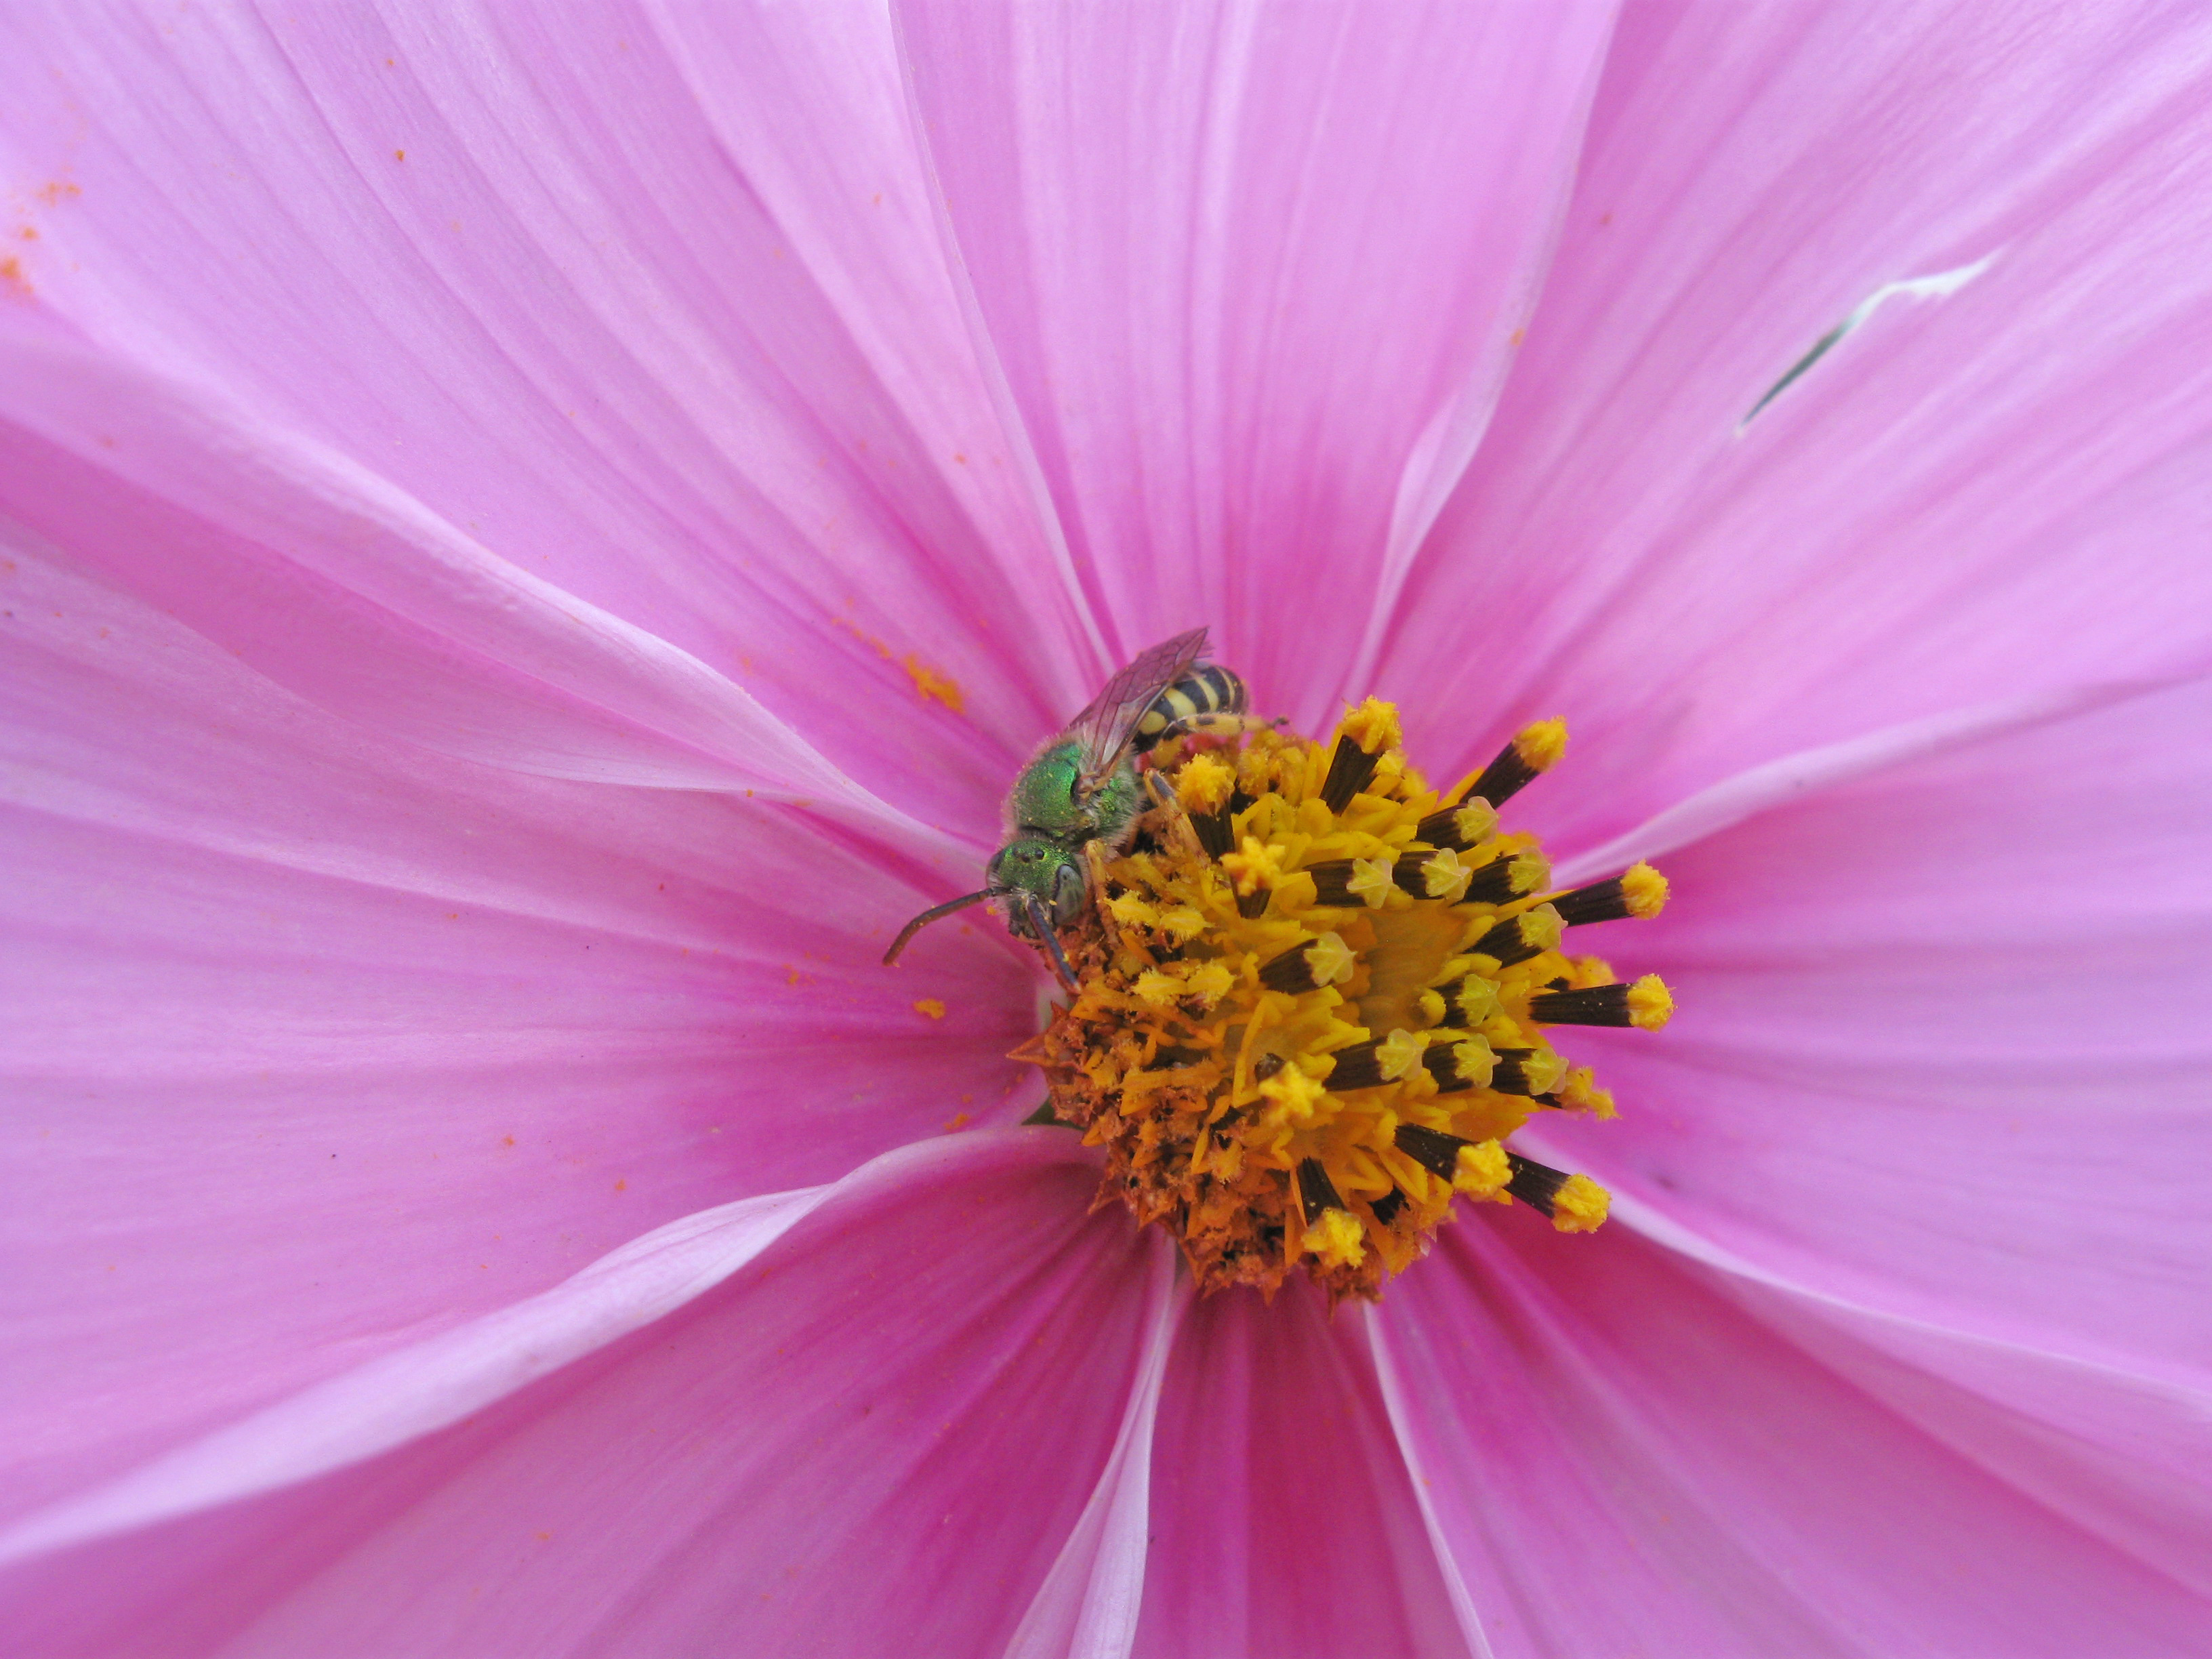 Metallic green sweat bee rests in a cosmos flower